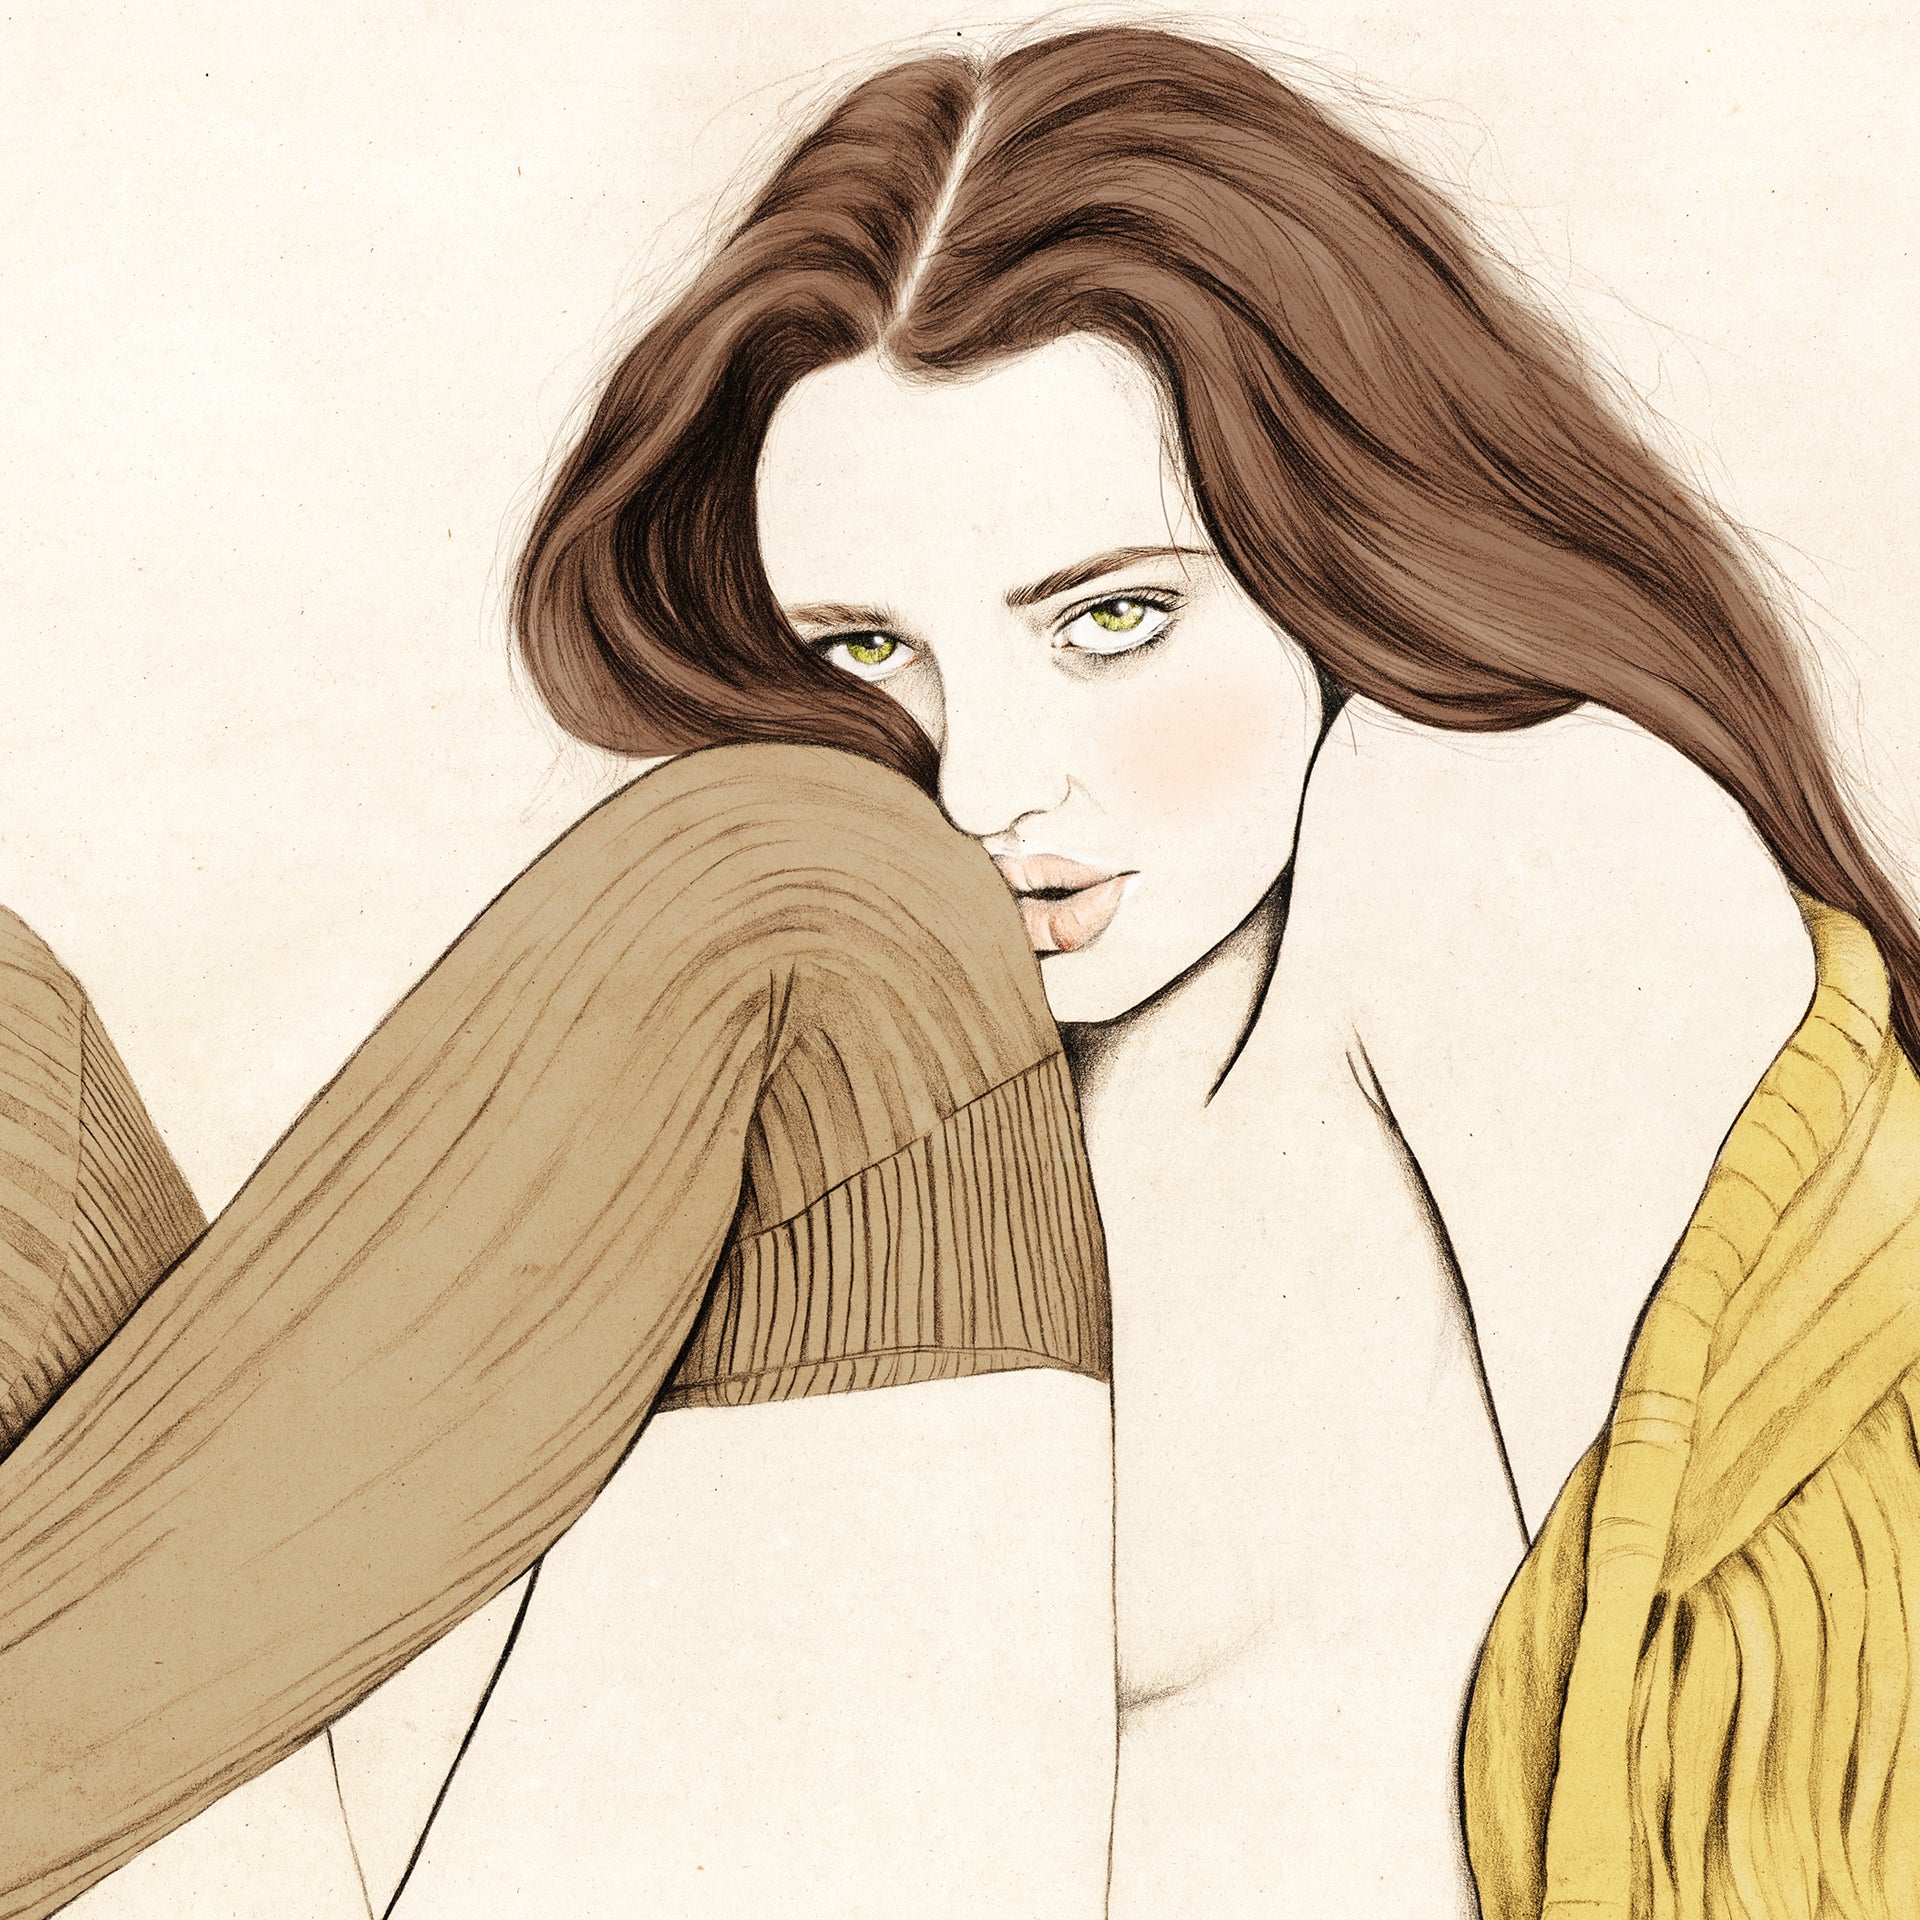 Beautiful nude girl illustration by Melbourne based illustrator Kelly Thompson